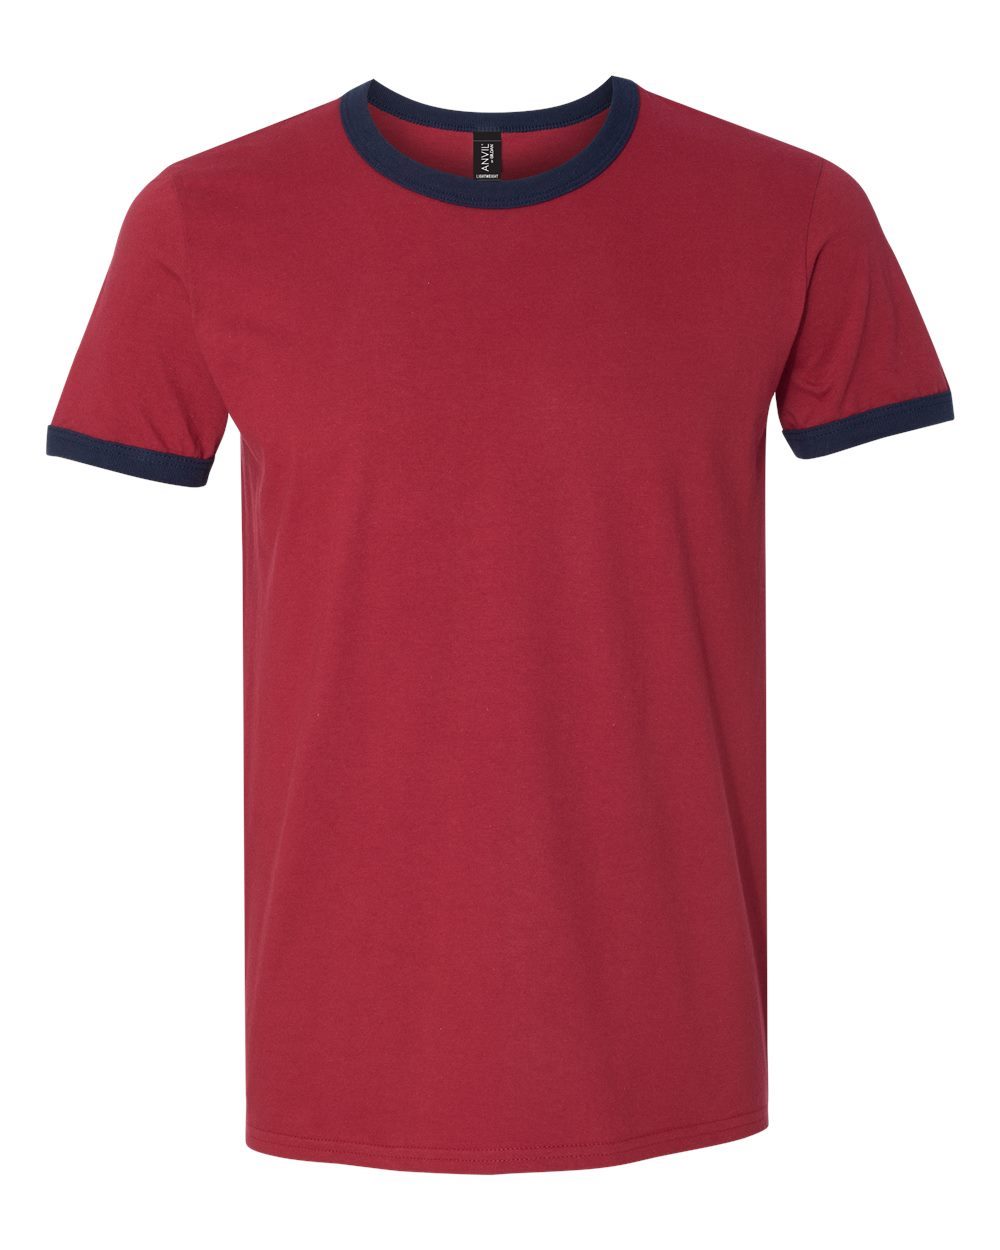 Anvil Mens Plain Lightweight Ringer T-Shirt 2XL Heather Blue/Navy